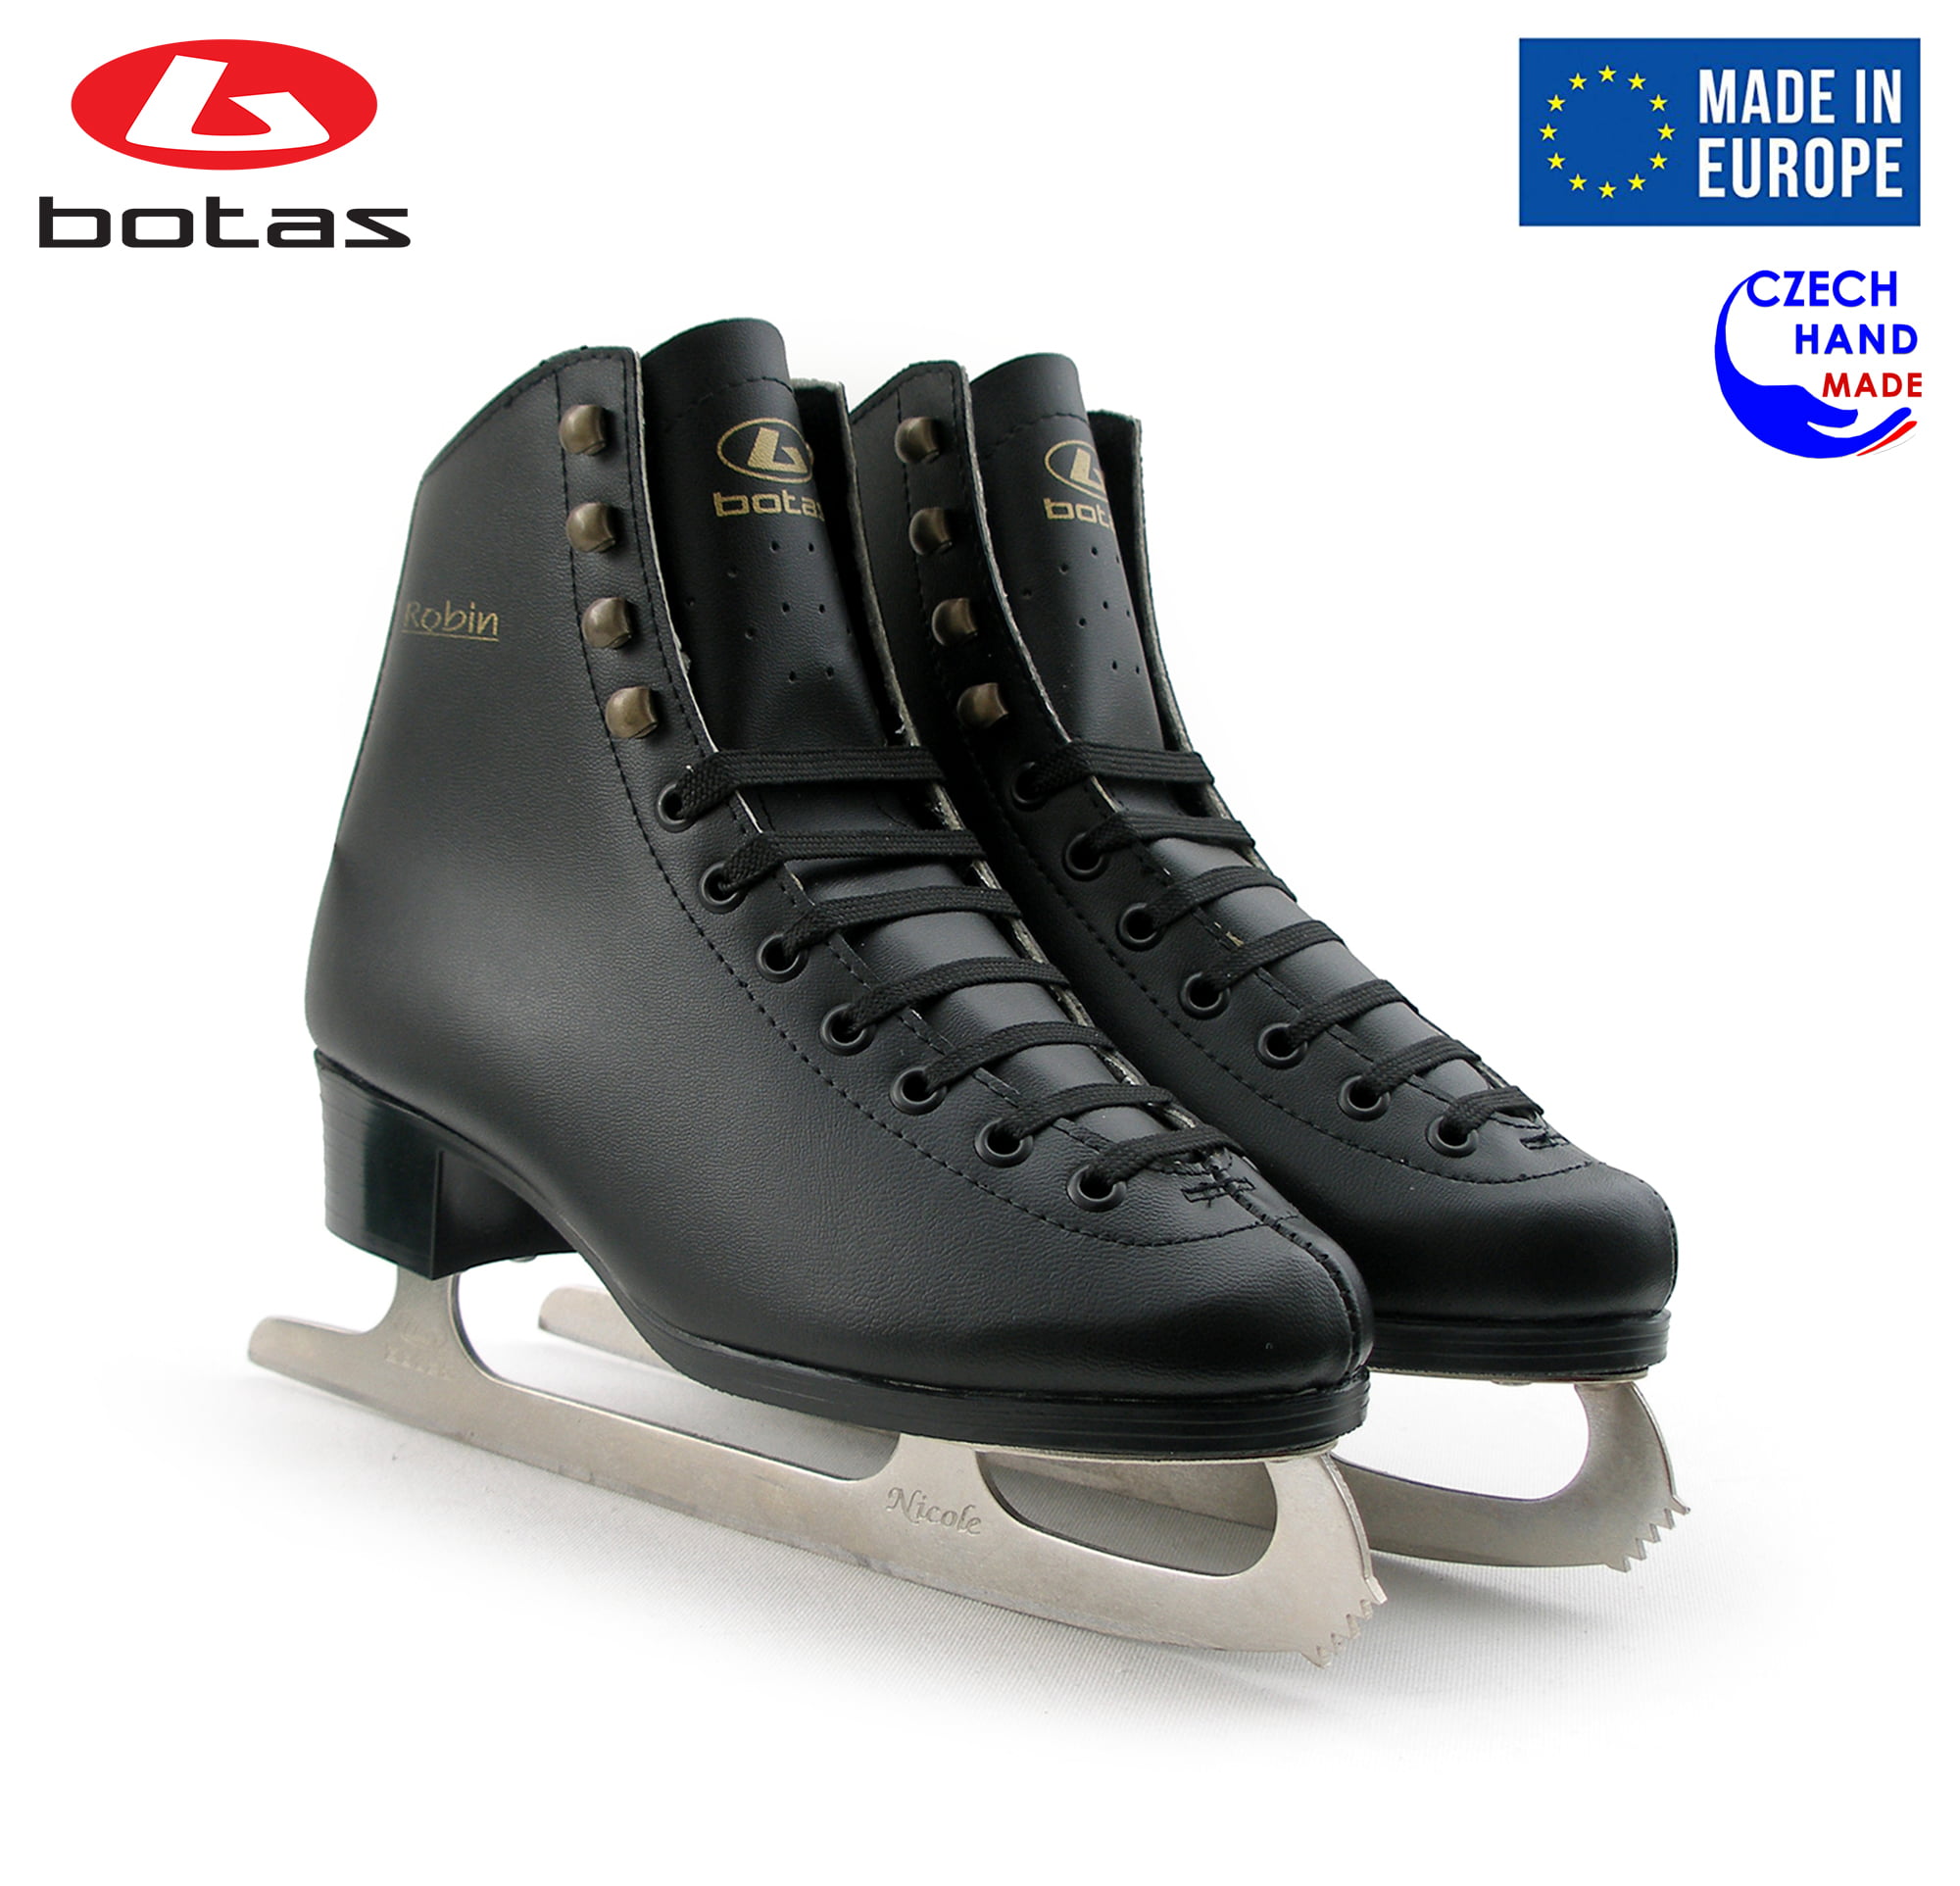 Arrugas vóleibol Unir BOTAS - model: ROBIN / Made in Europe (Czech Republic) / Comfortable Figure  Ice Skates for Men, Boys / Wide Shape / NICOLE blades / Color: Black, Size:  Adult 4.5 - Walmart.com